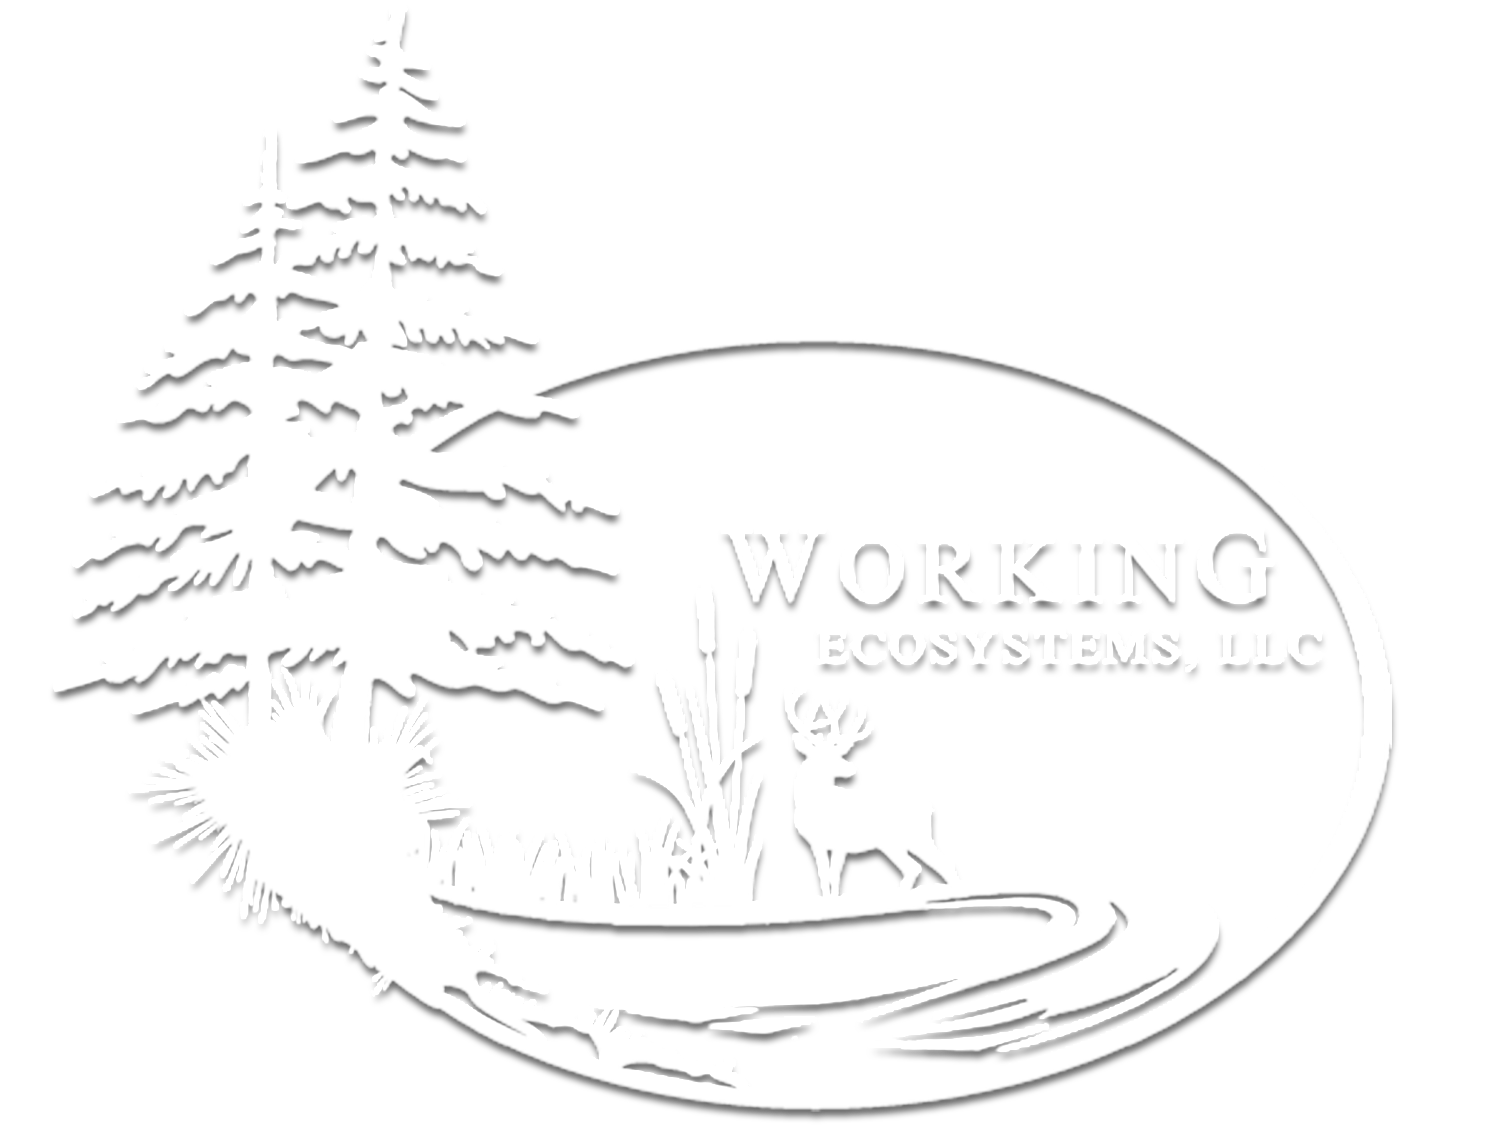 Working Ecosystems, LLC